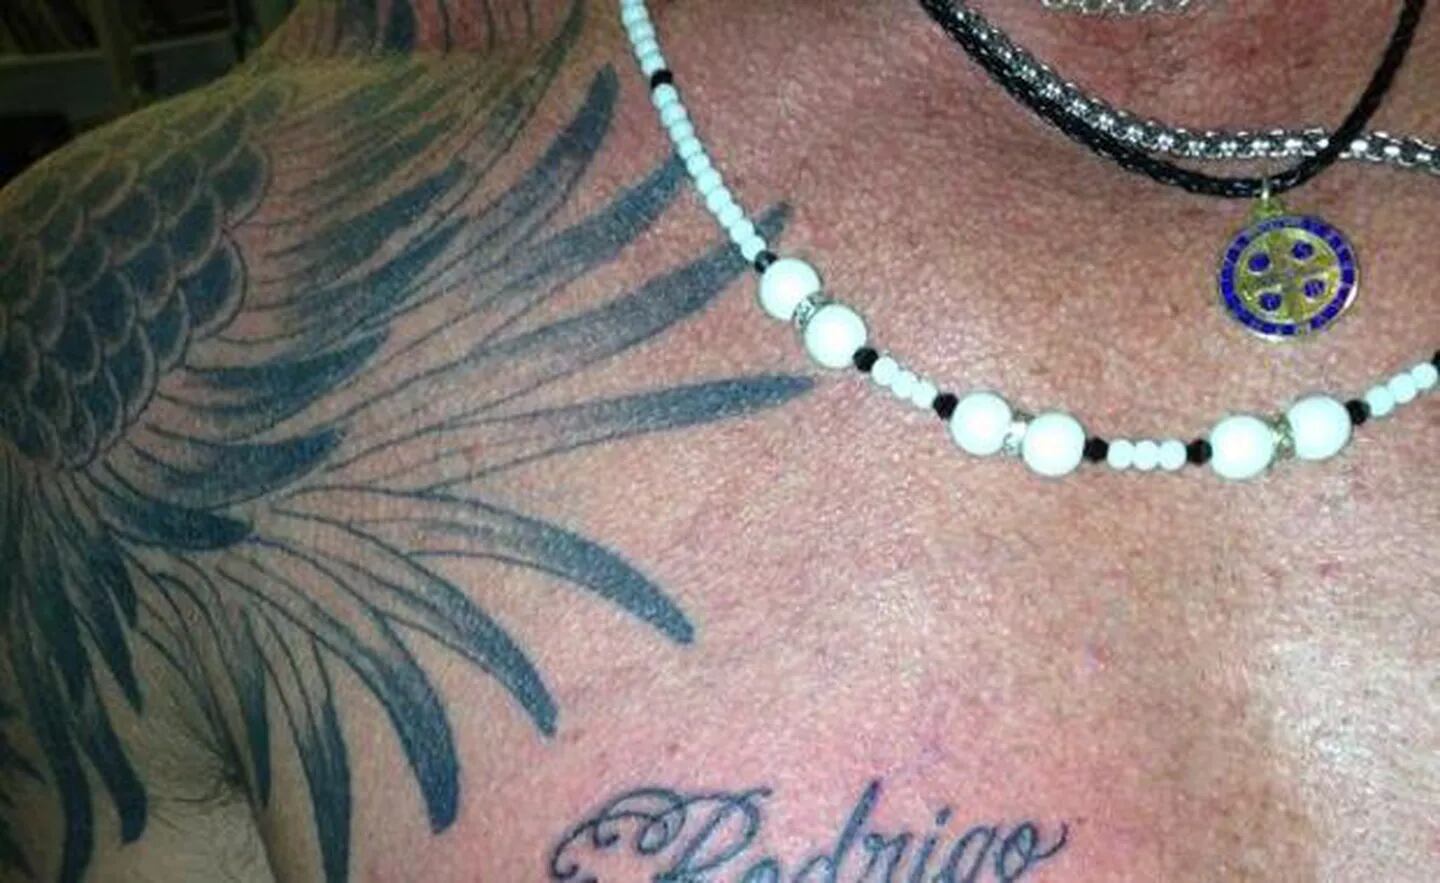 El jugado tatuaje de Ricardo Fort (Foto: Twitter).